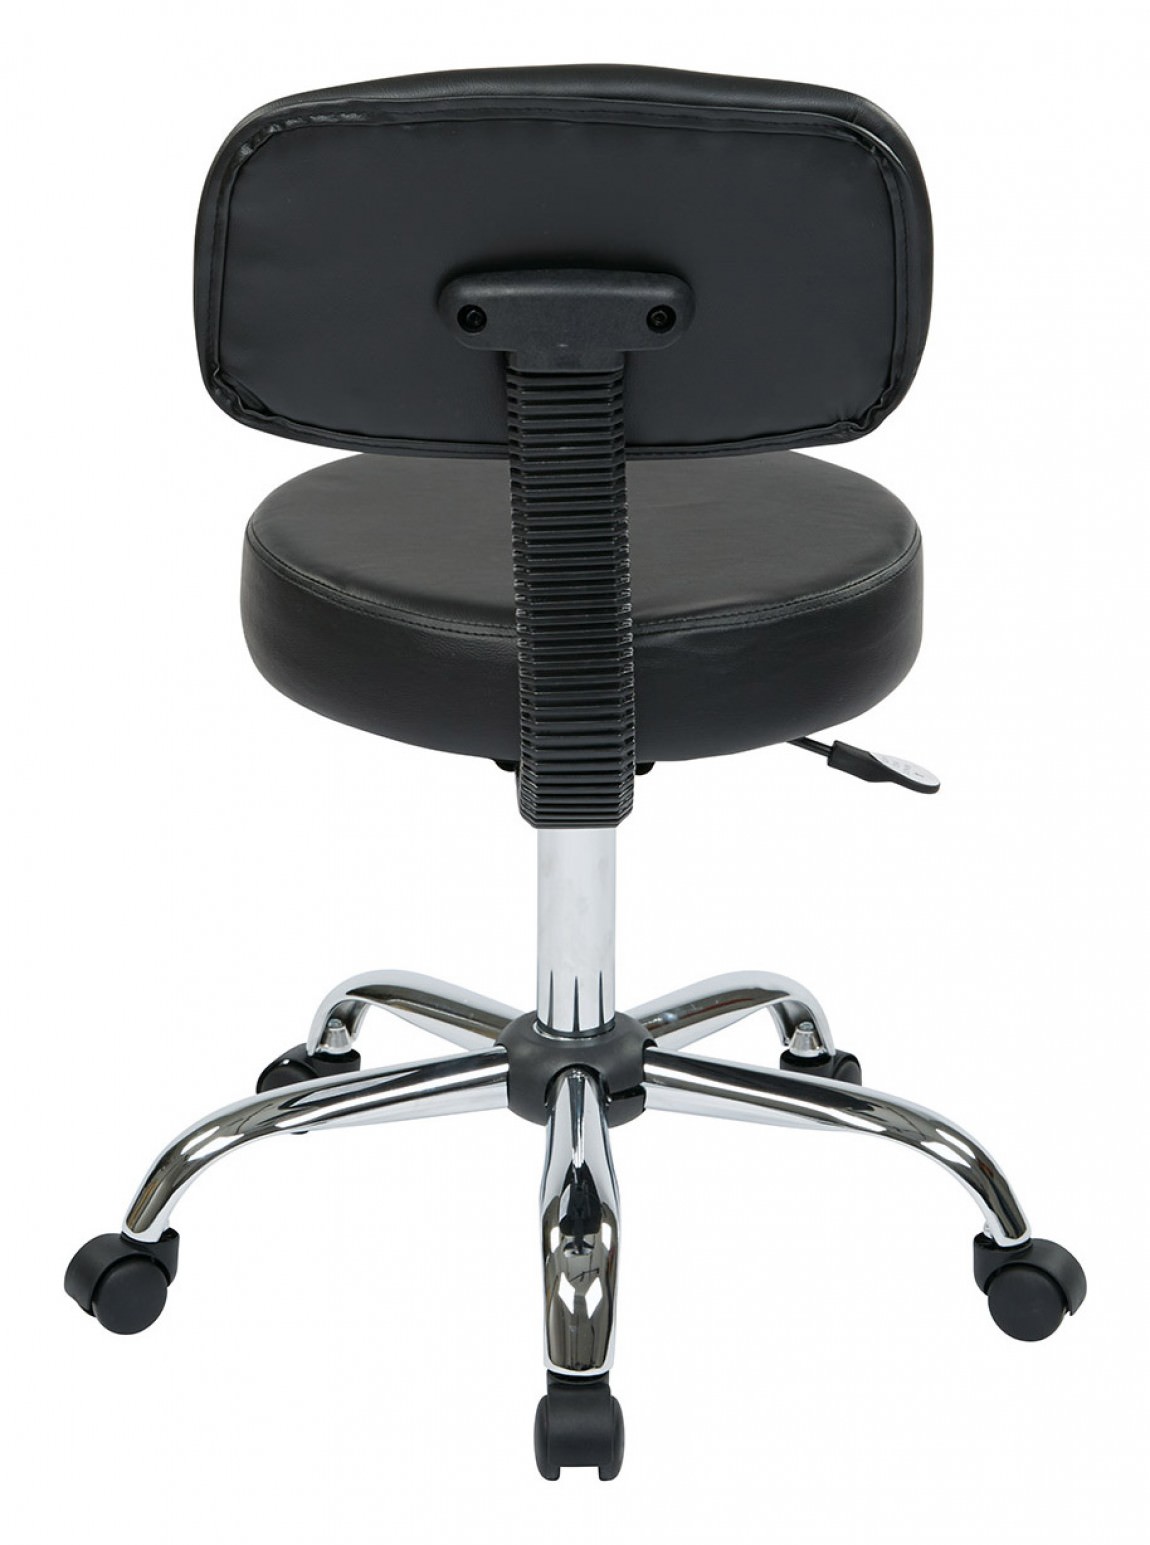 https://madisonliquidators.com/images/p/1150/24870-rolling-stool-chair-2.jpg